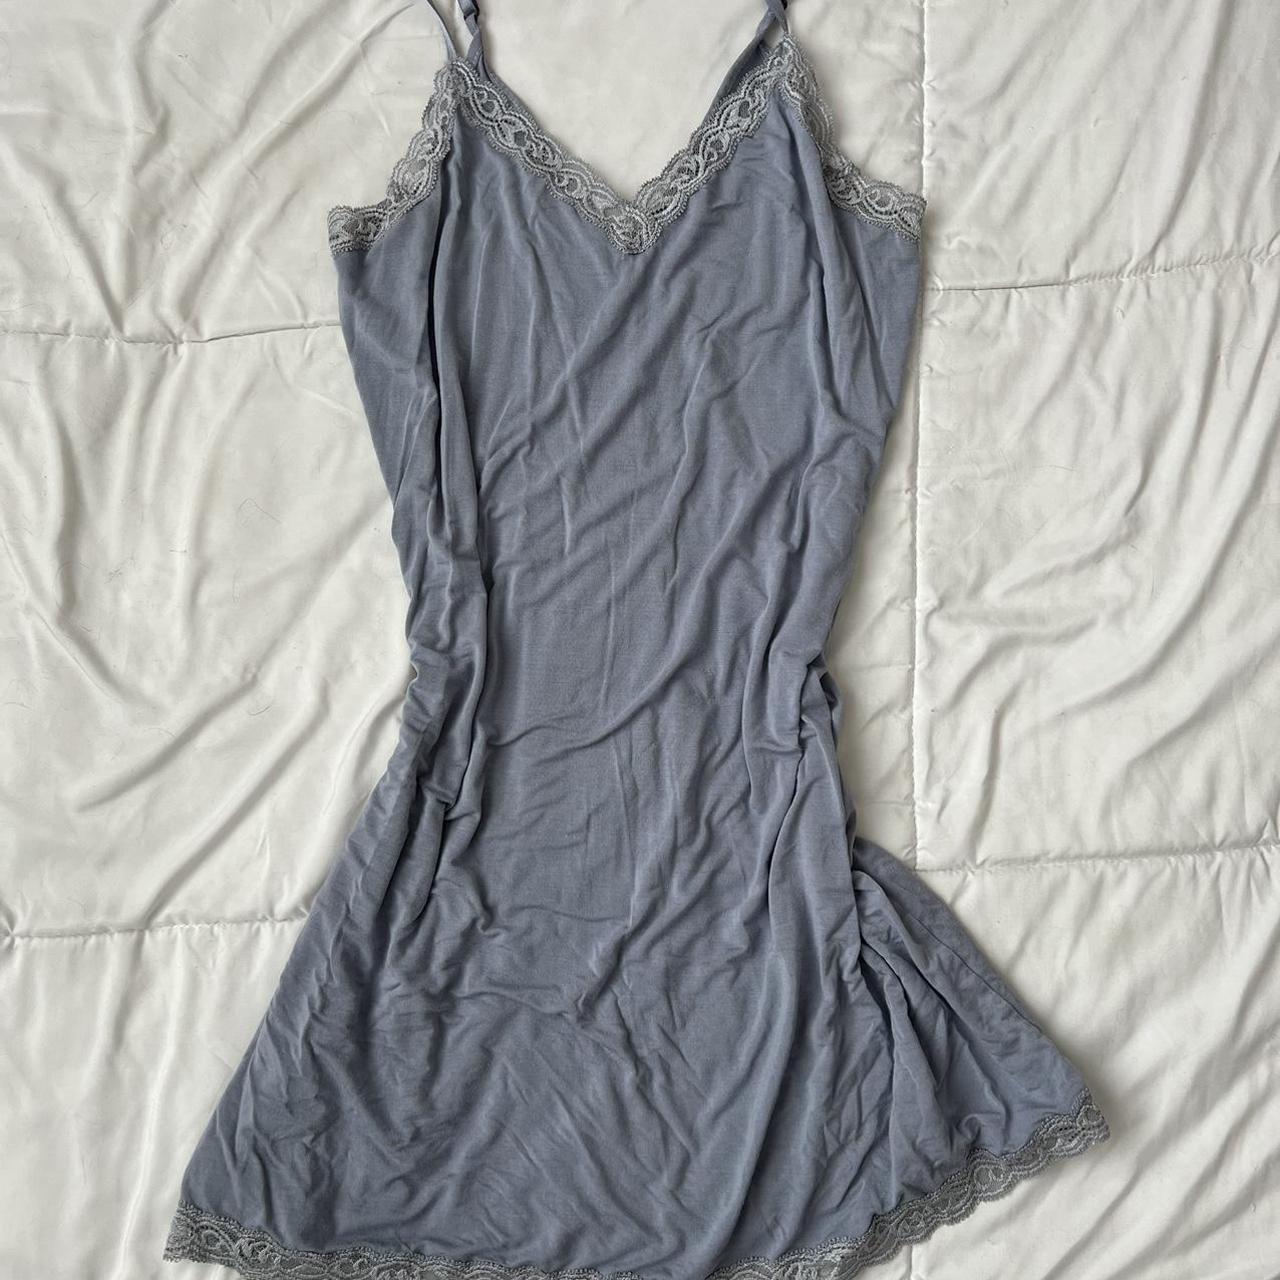 Natori Women's Grey and Blue Dress